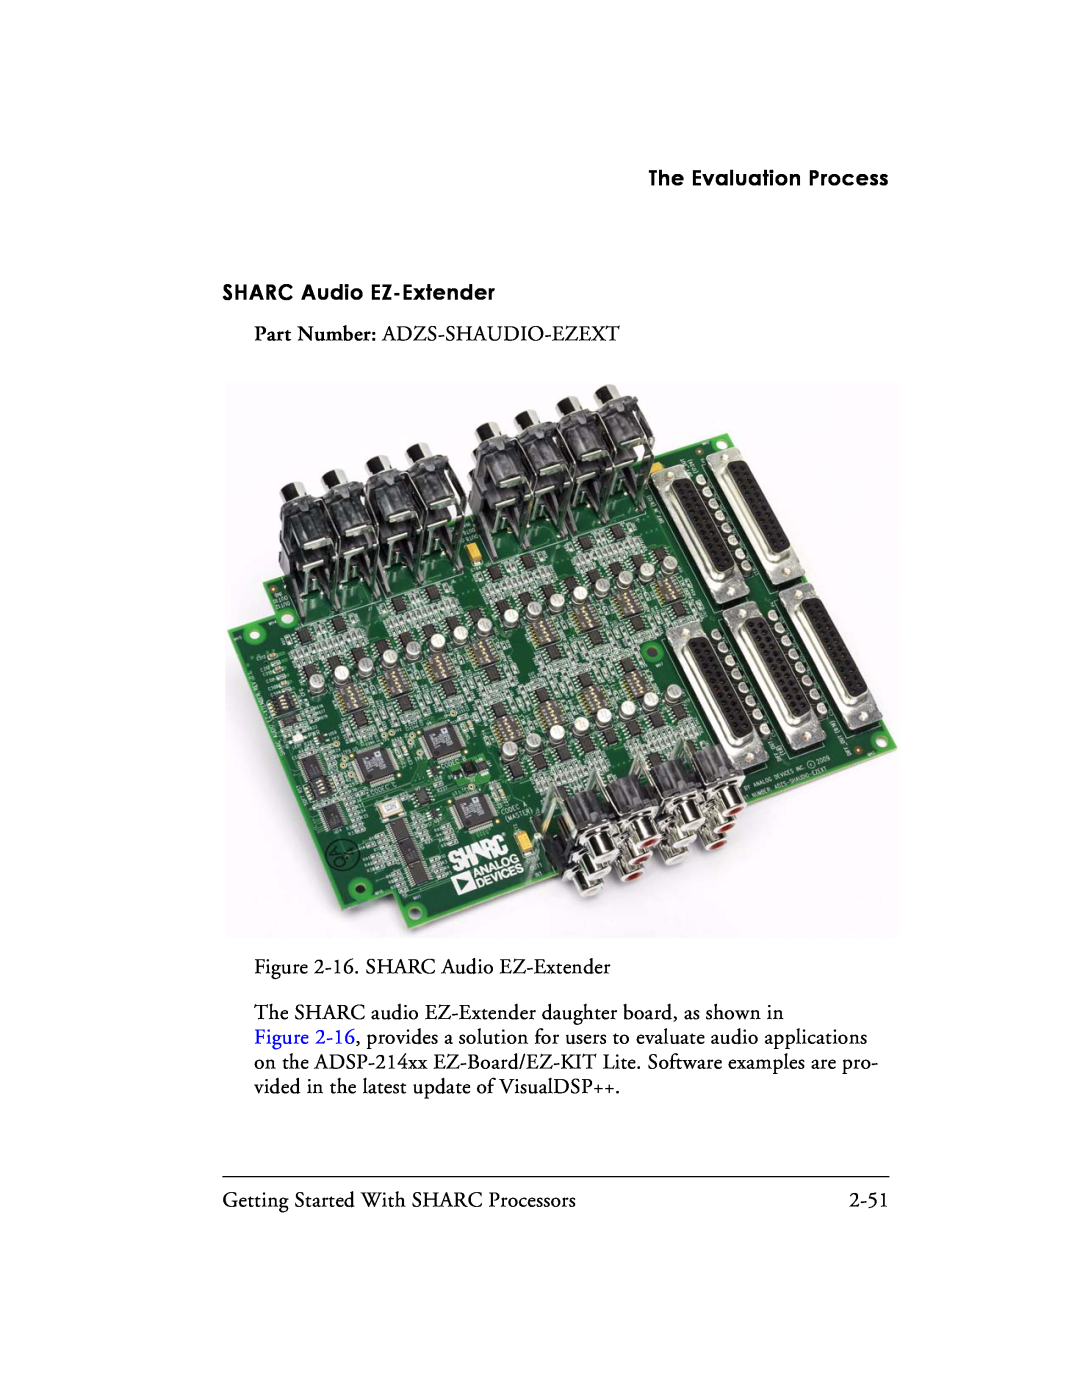 Analog Devices 82-003536-01 manual The Evaluation Process SHARC Audio EZ-Extender, Part Number ADZS-SHAUDIO-EZEXT, 2-51 